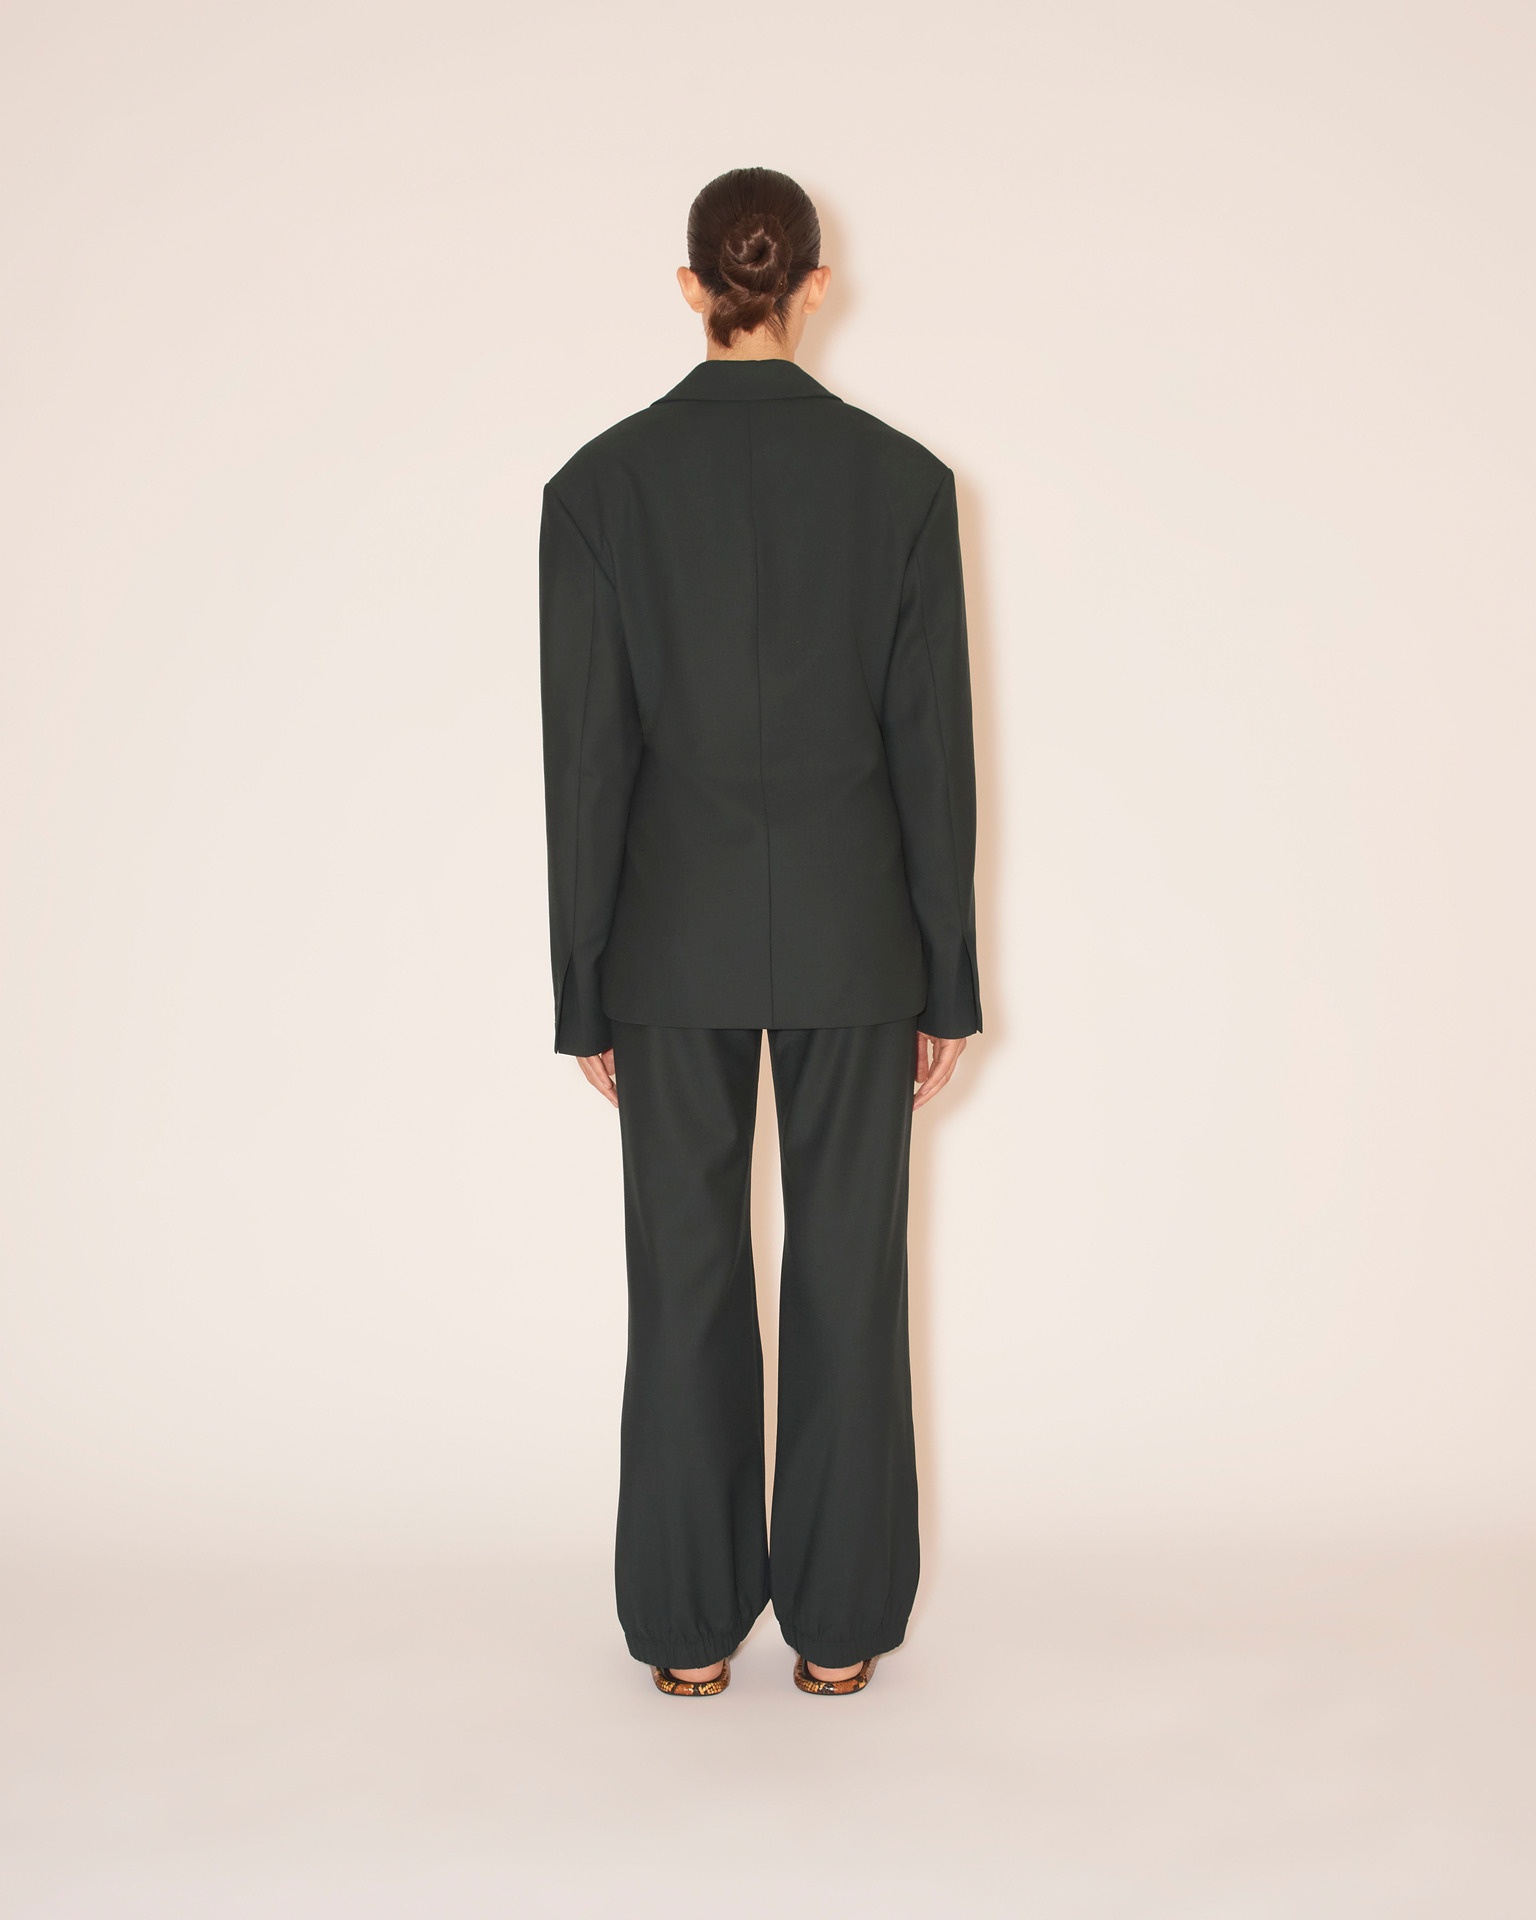 NICIA - Elasticated trouser - Pine green - 2